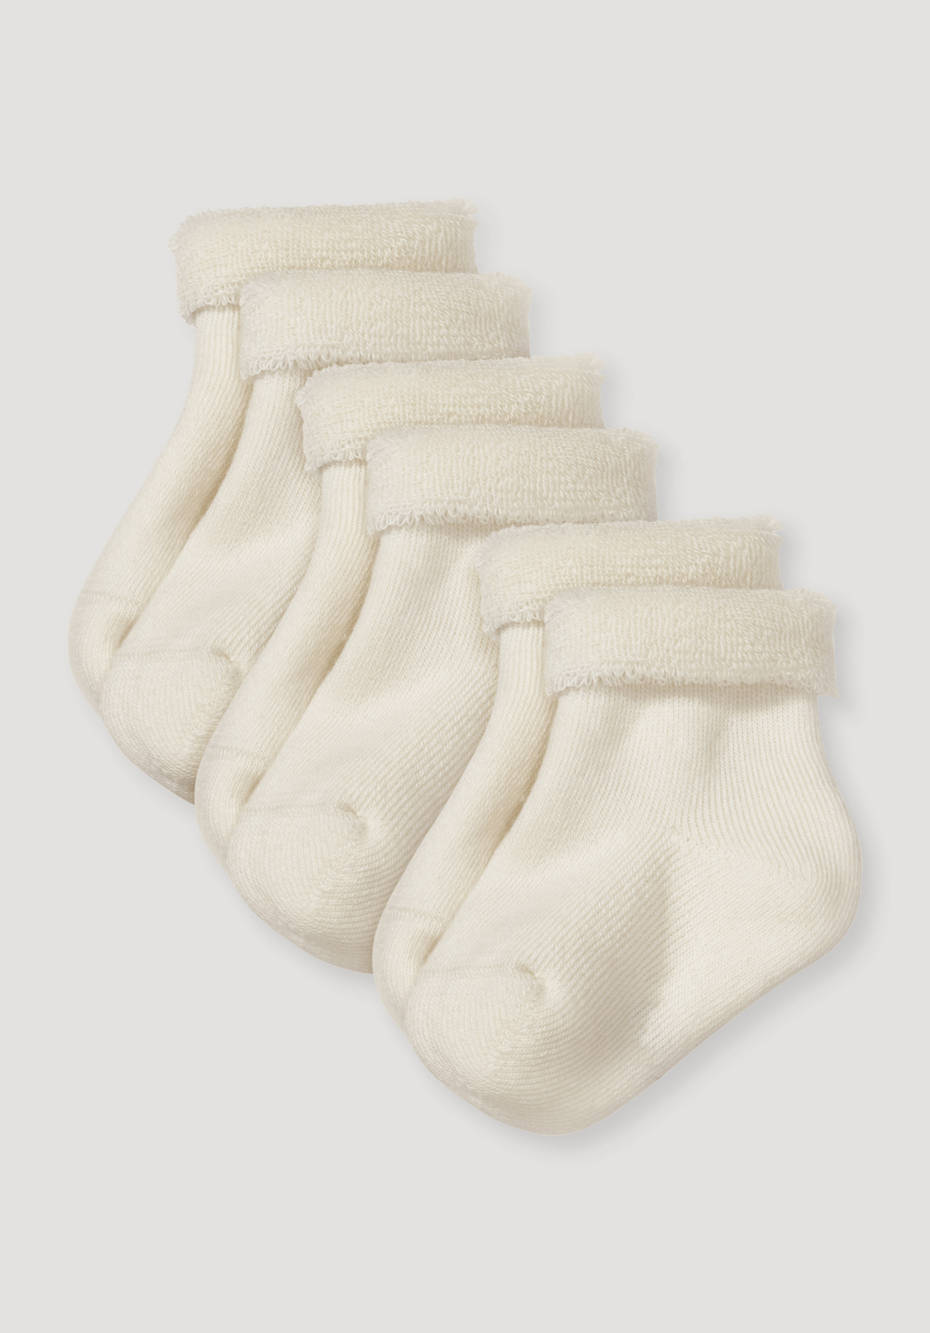 Plush socks in a pack of 3